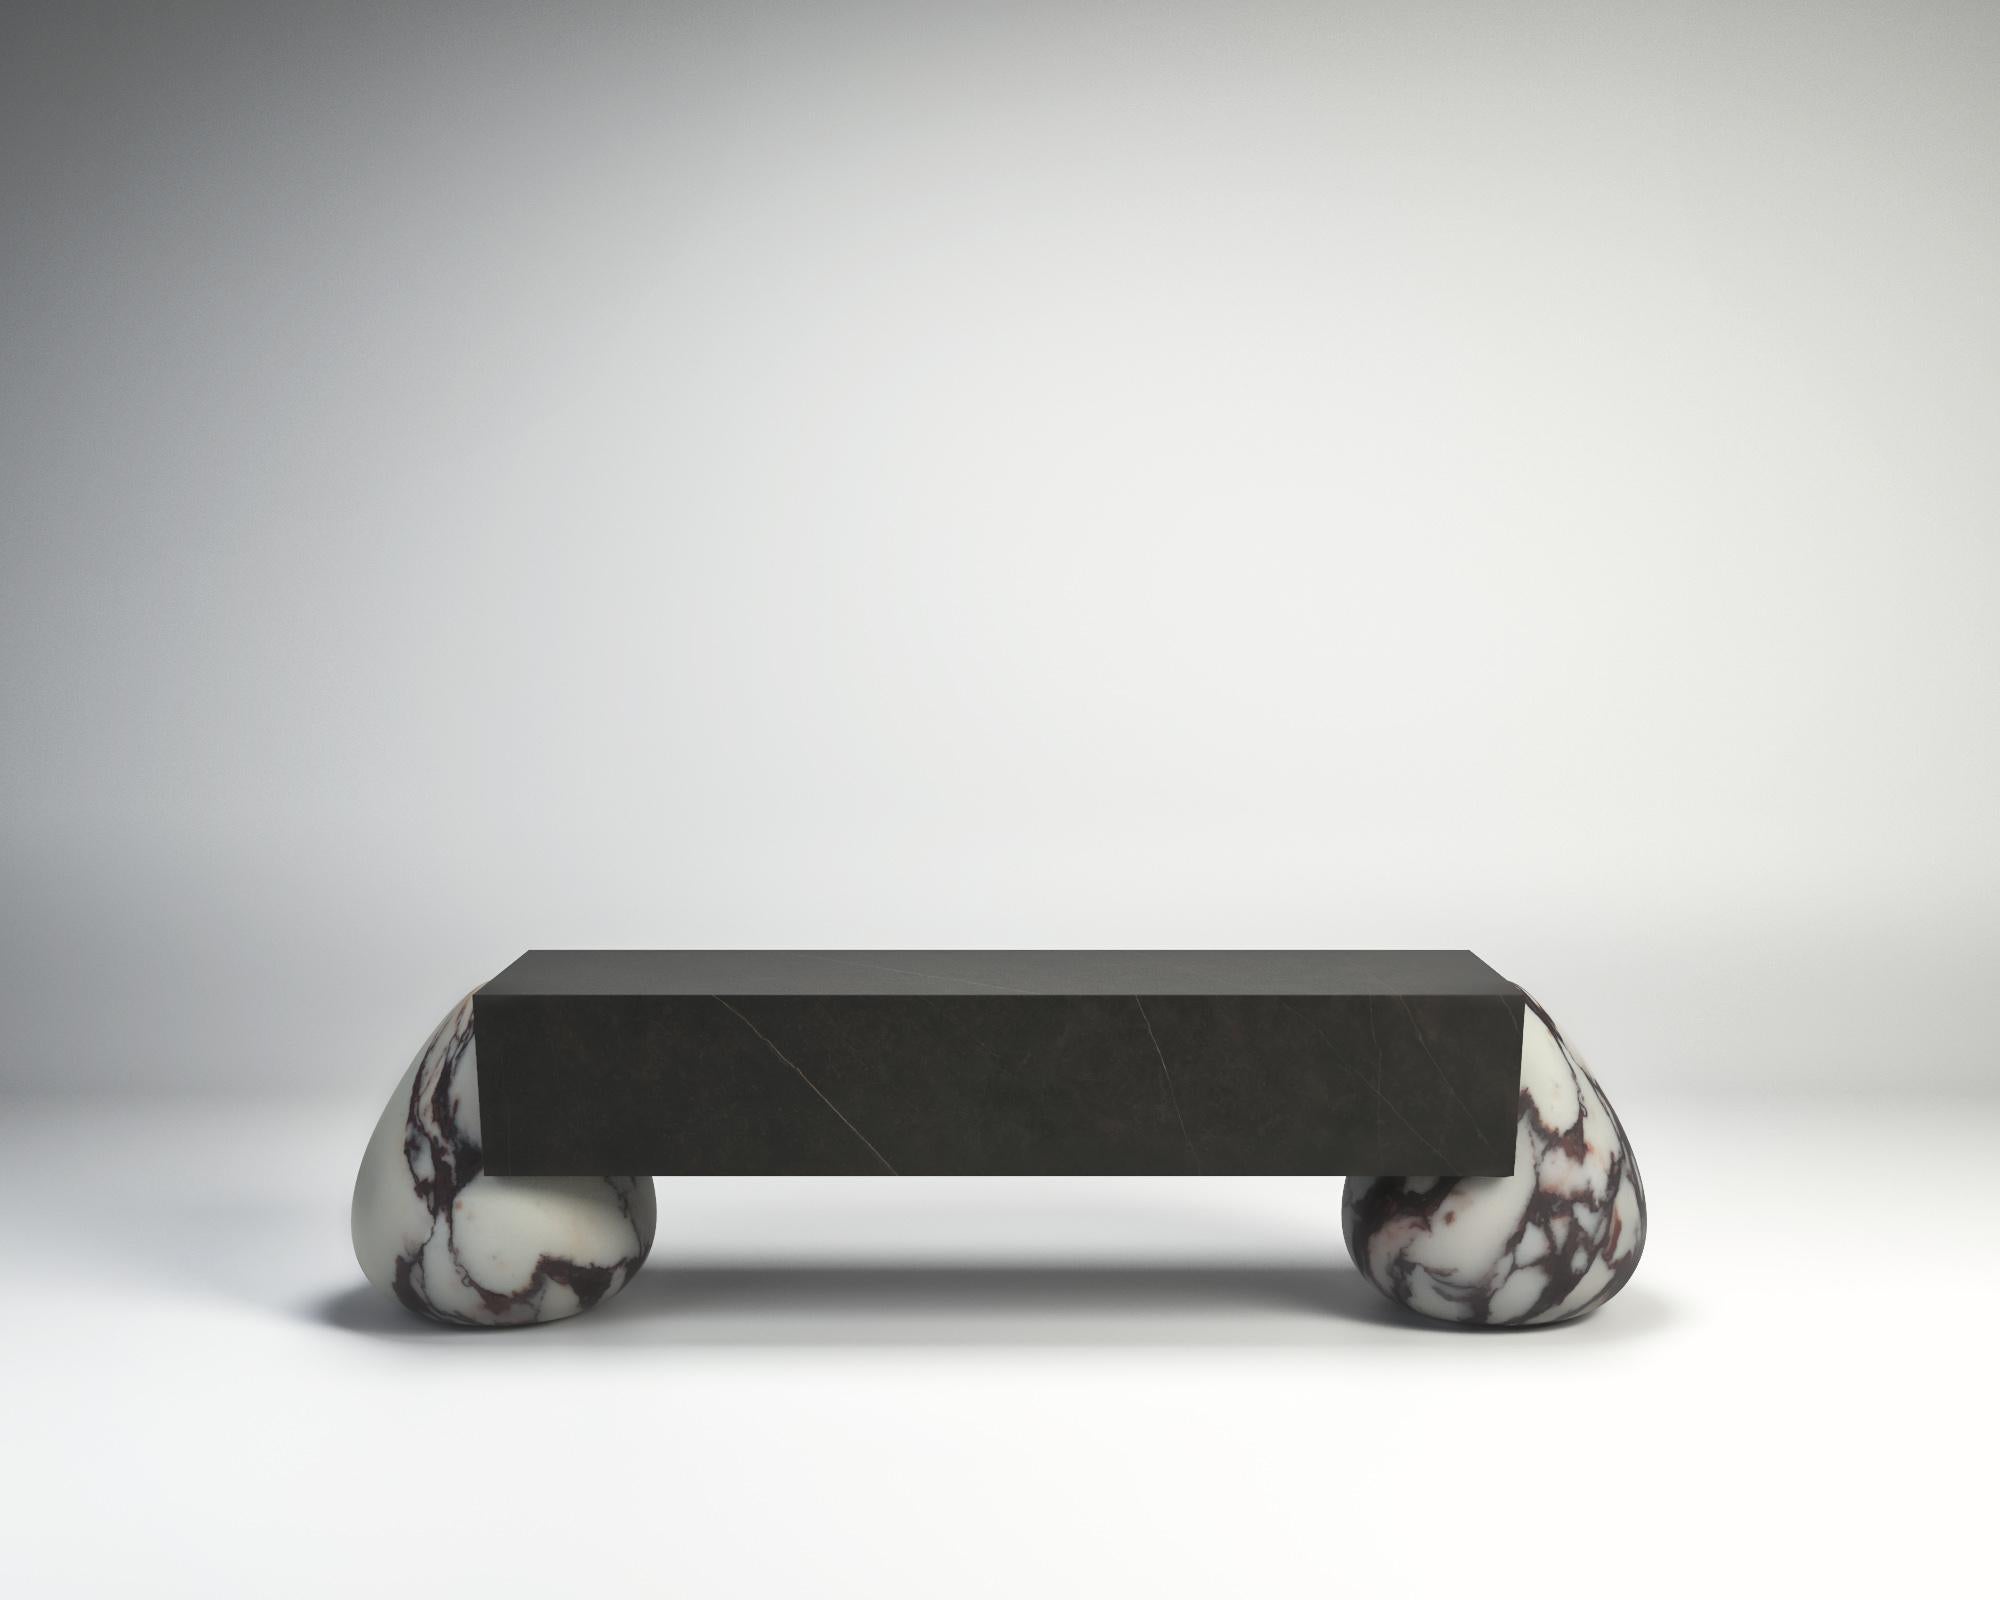 Flint bench by Marmi Serafini
Dimensions: D 38 x W 156,6 x H 41 cm
Materials: Marble, wood
Weight: 150 kg

